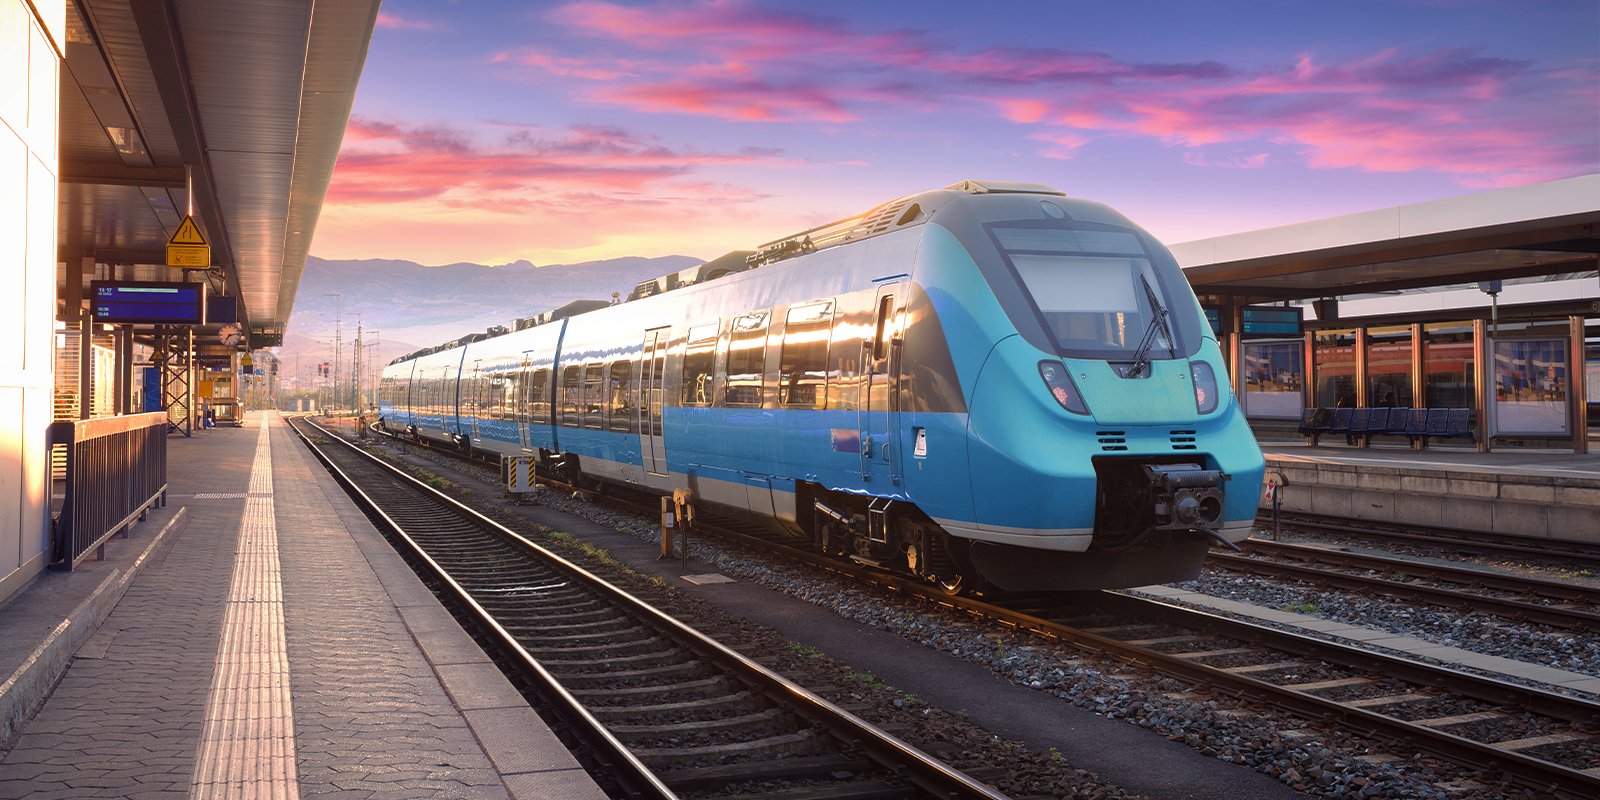 Bombardier sells transportation business to Alstom for €6.2 billion